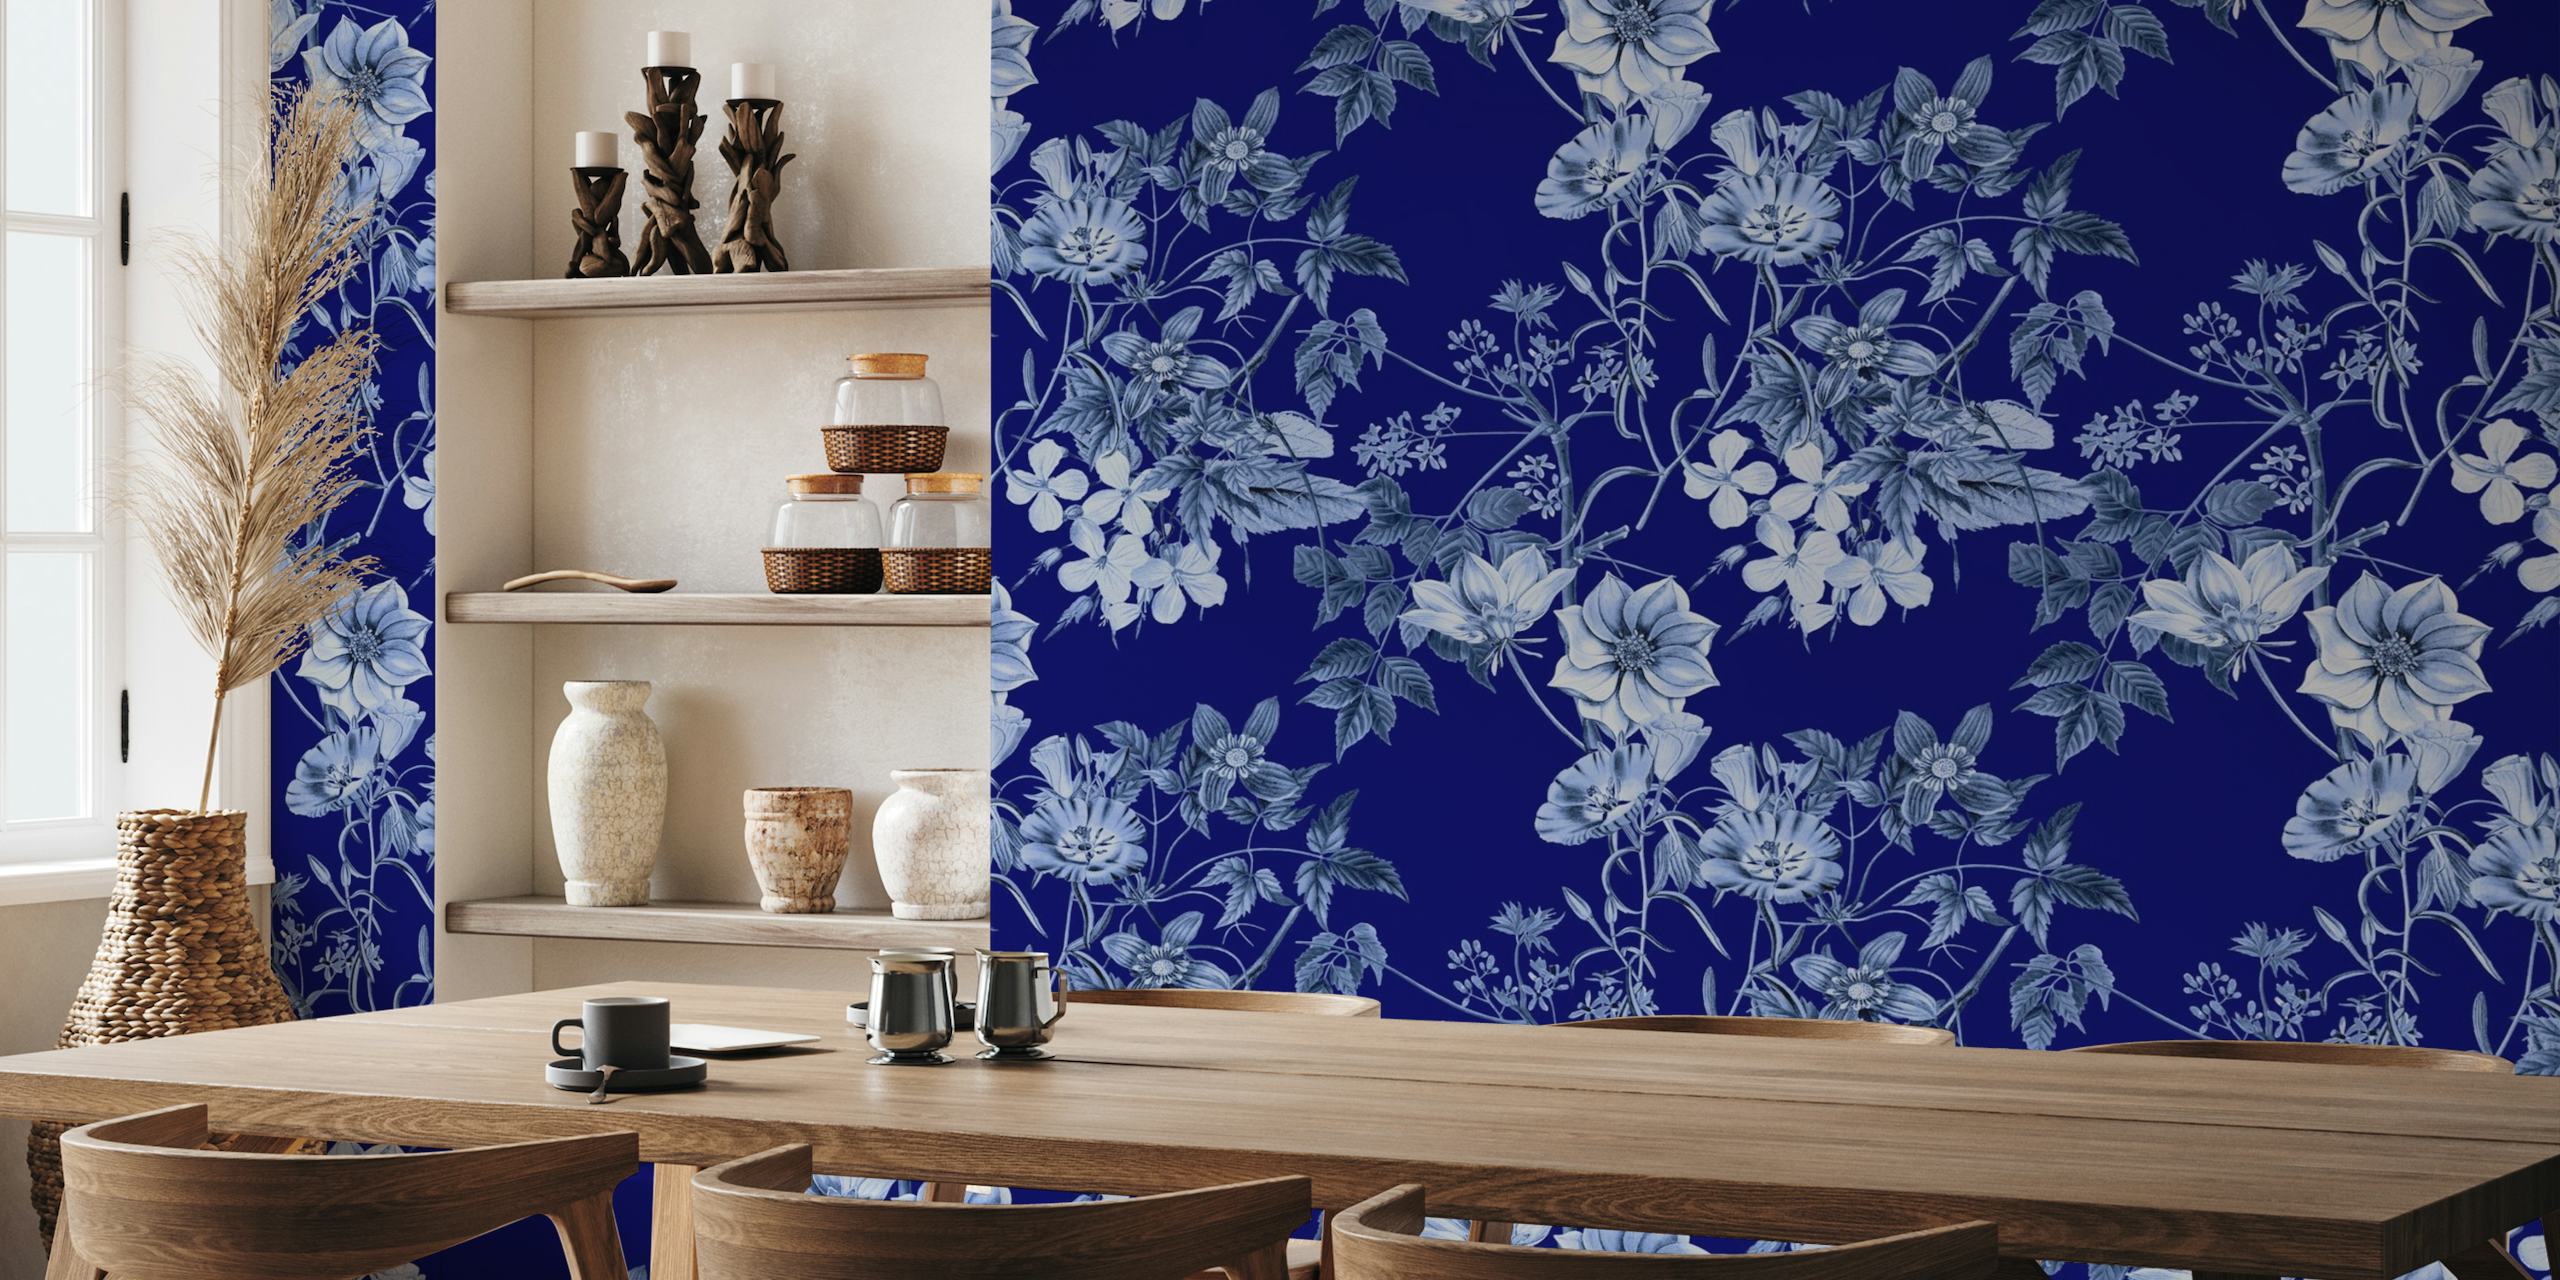 Fotomural floral azul intenso con un intrincado diseño floral